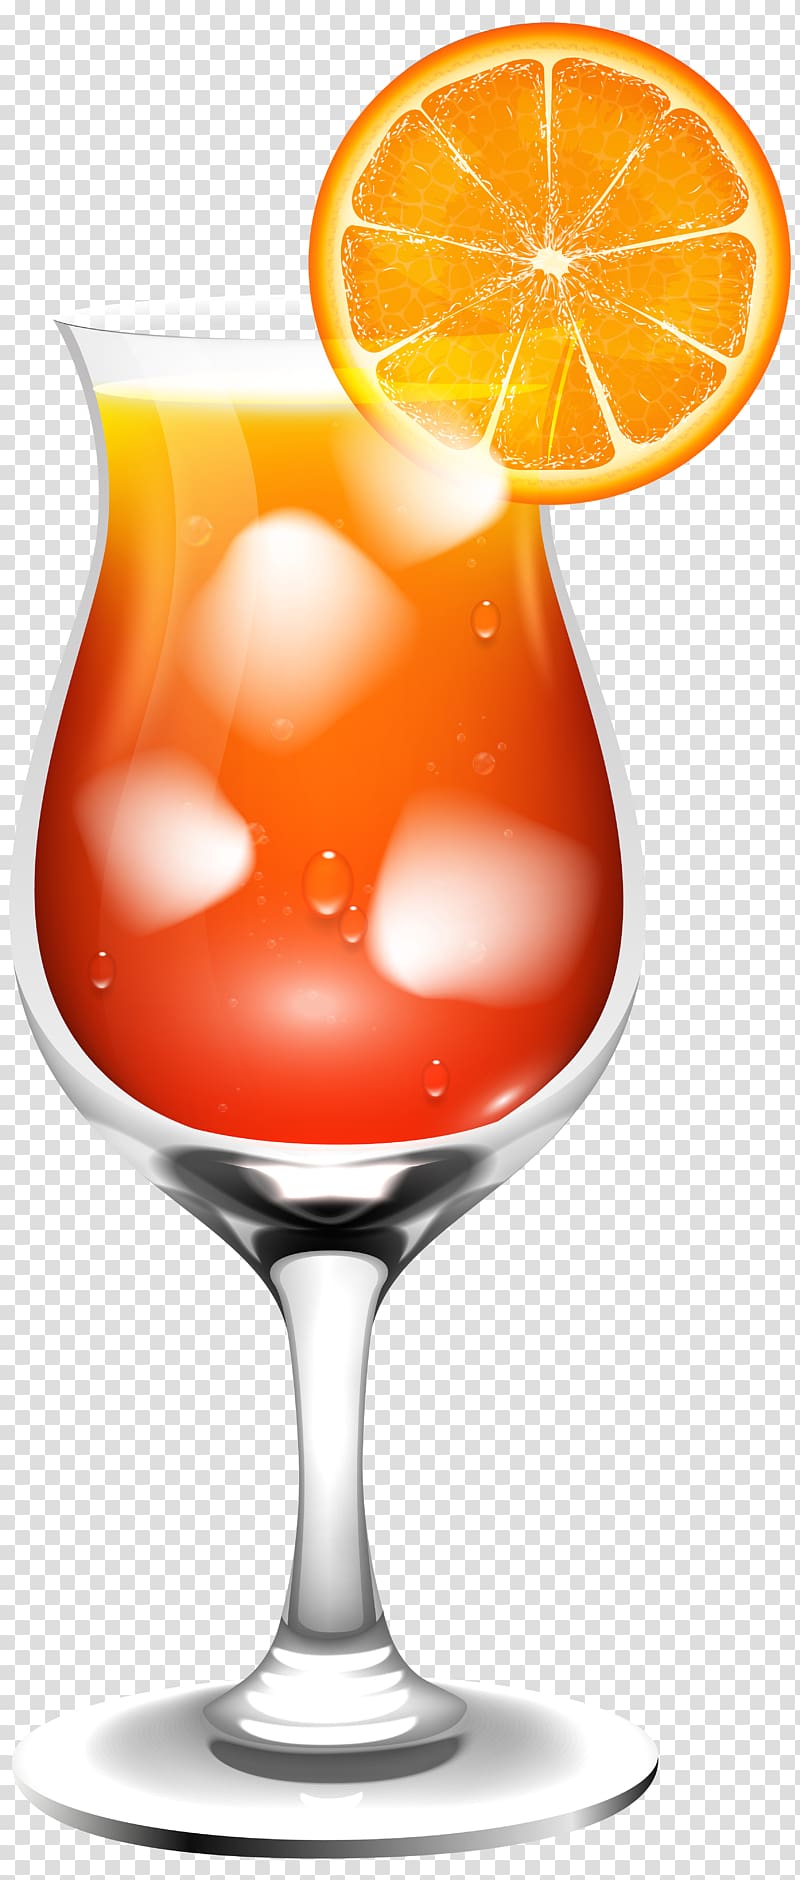 footed wine glass and orange fruit illustration, Cocktail Juice Martini Punch , Orange Cocktail transparent background PNG clipart